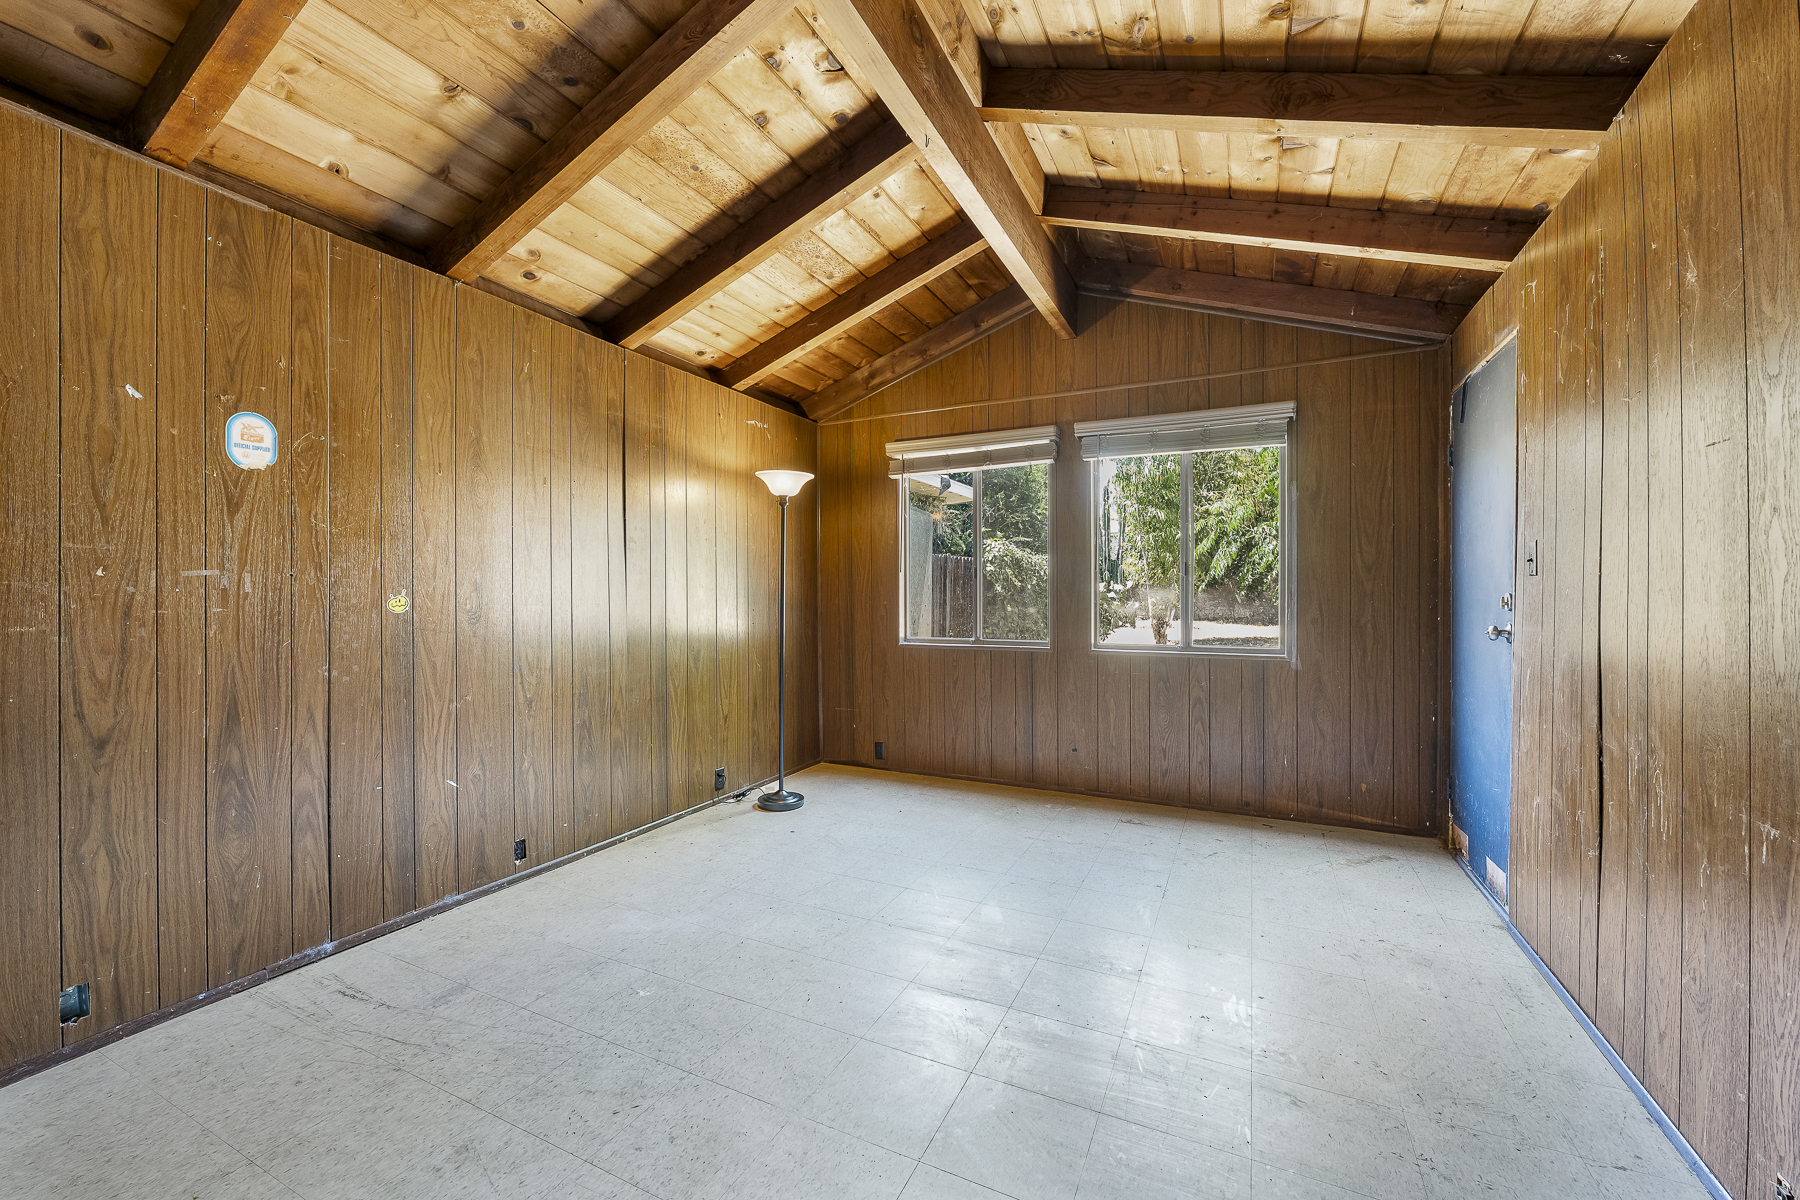 319 E. Francis Ave, La Habra, CA 90631: Wood panel room with blue door.